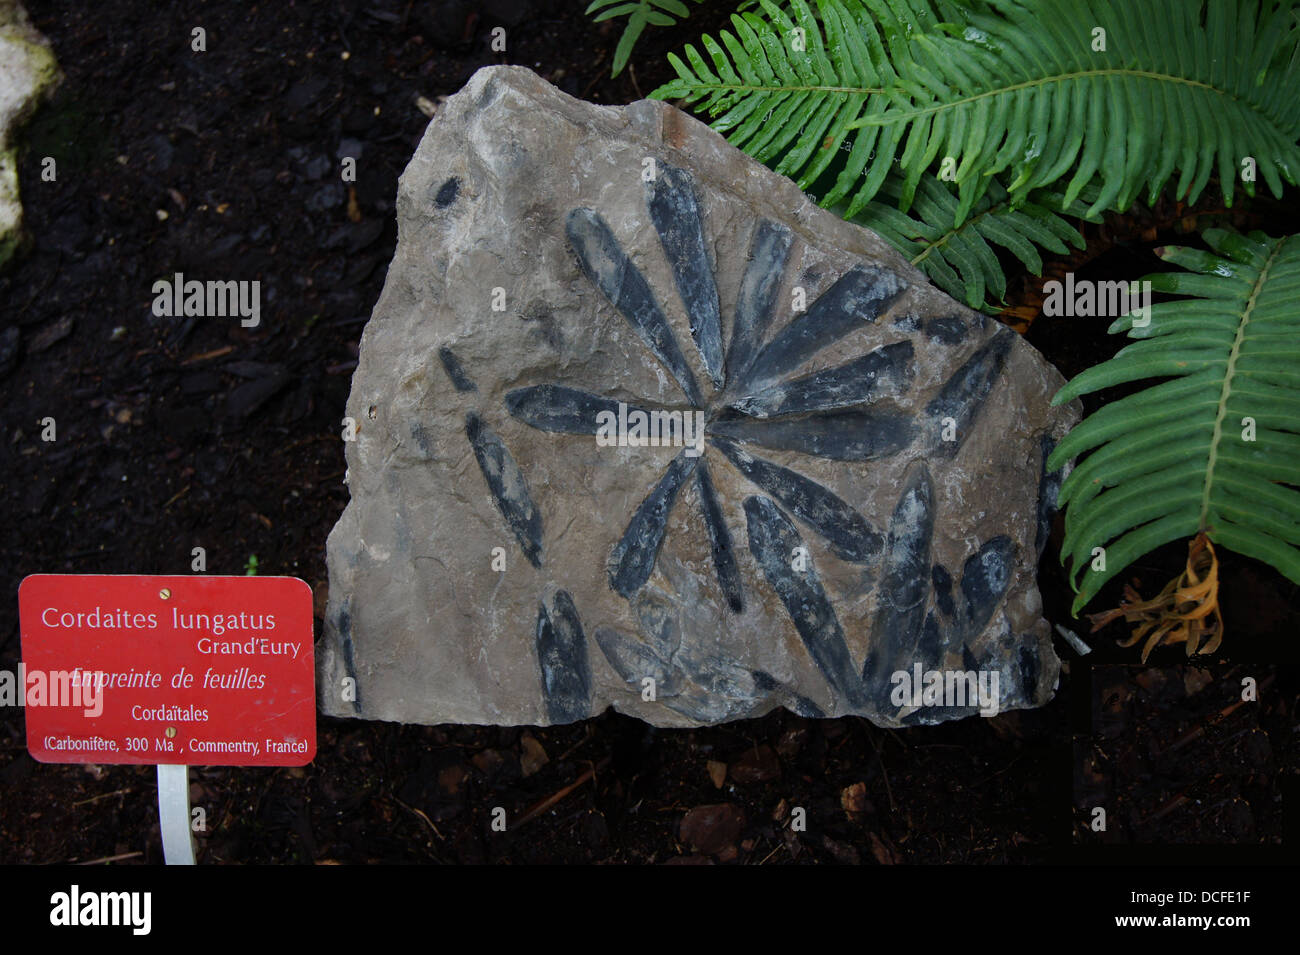 extinct plant (Cordaites lungatus), ca. 300 millions years, near modern ferns, Jardin des Plantes, Paris. Identification plaque. Stock Photo